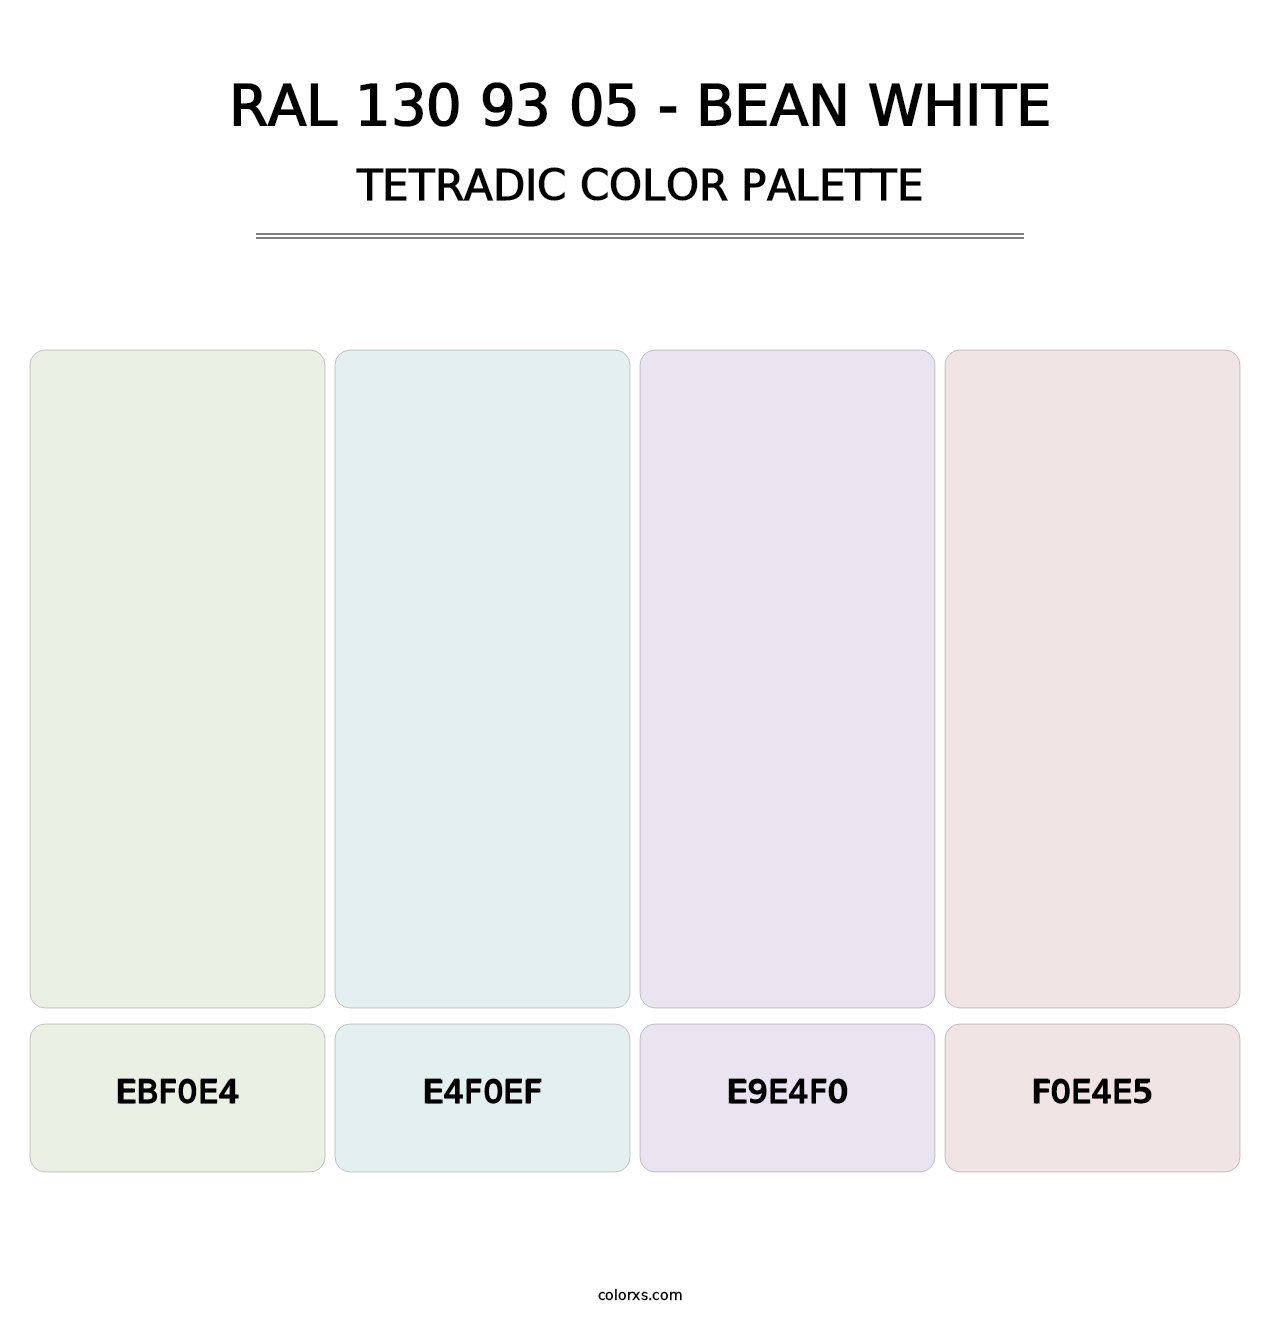 RAL 130 93 05 - Bean White - Tetradic Color Palette